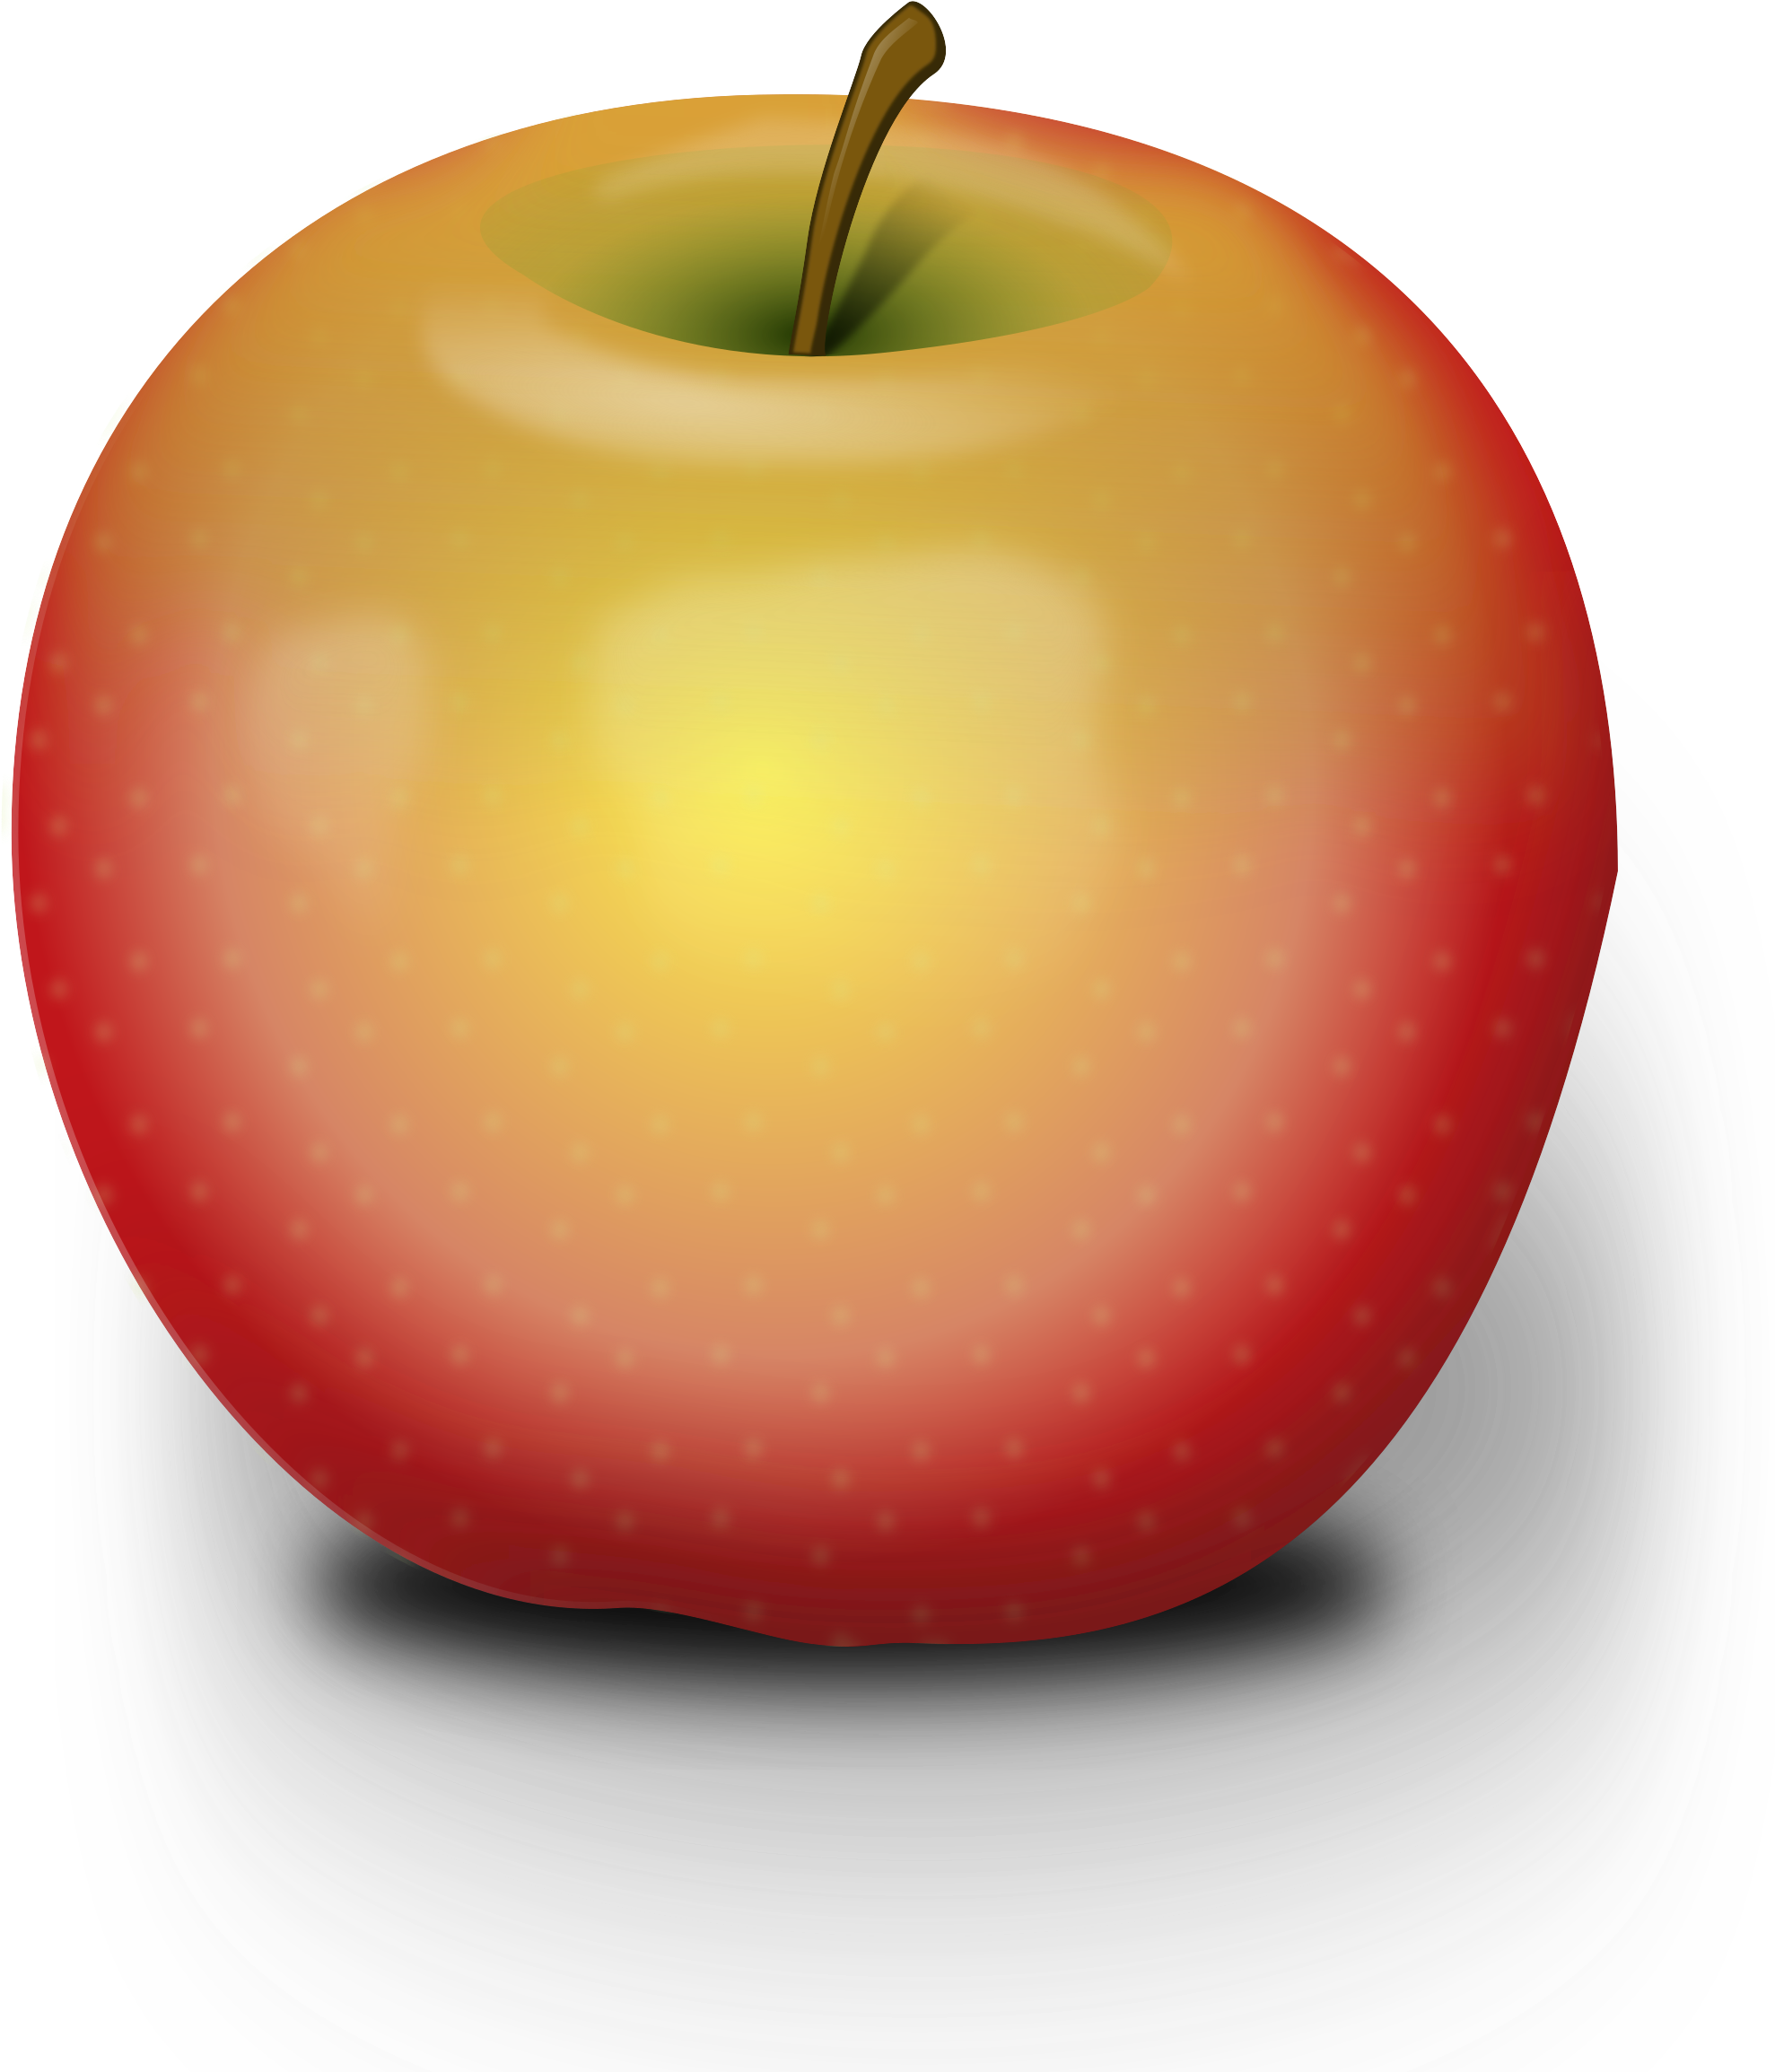 Apple Clip Art Farm Fresh Apples Png Download 17332132 Free